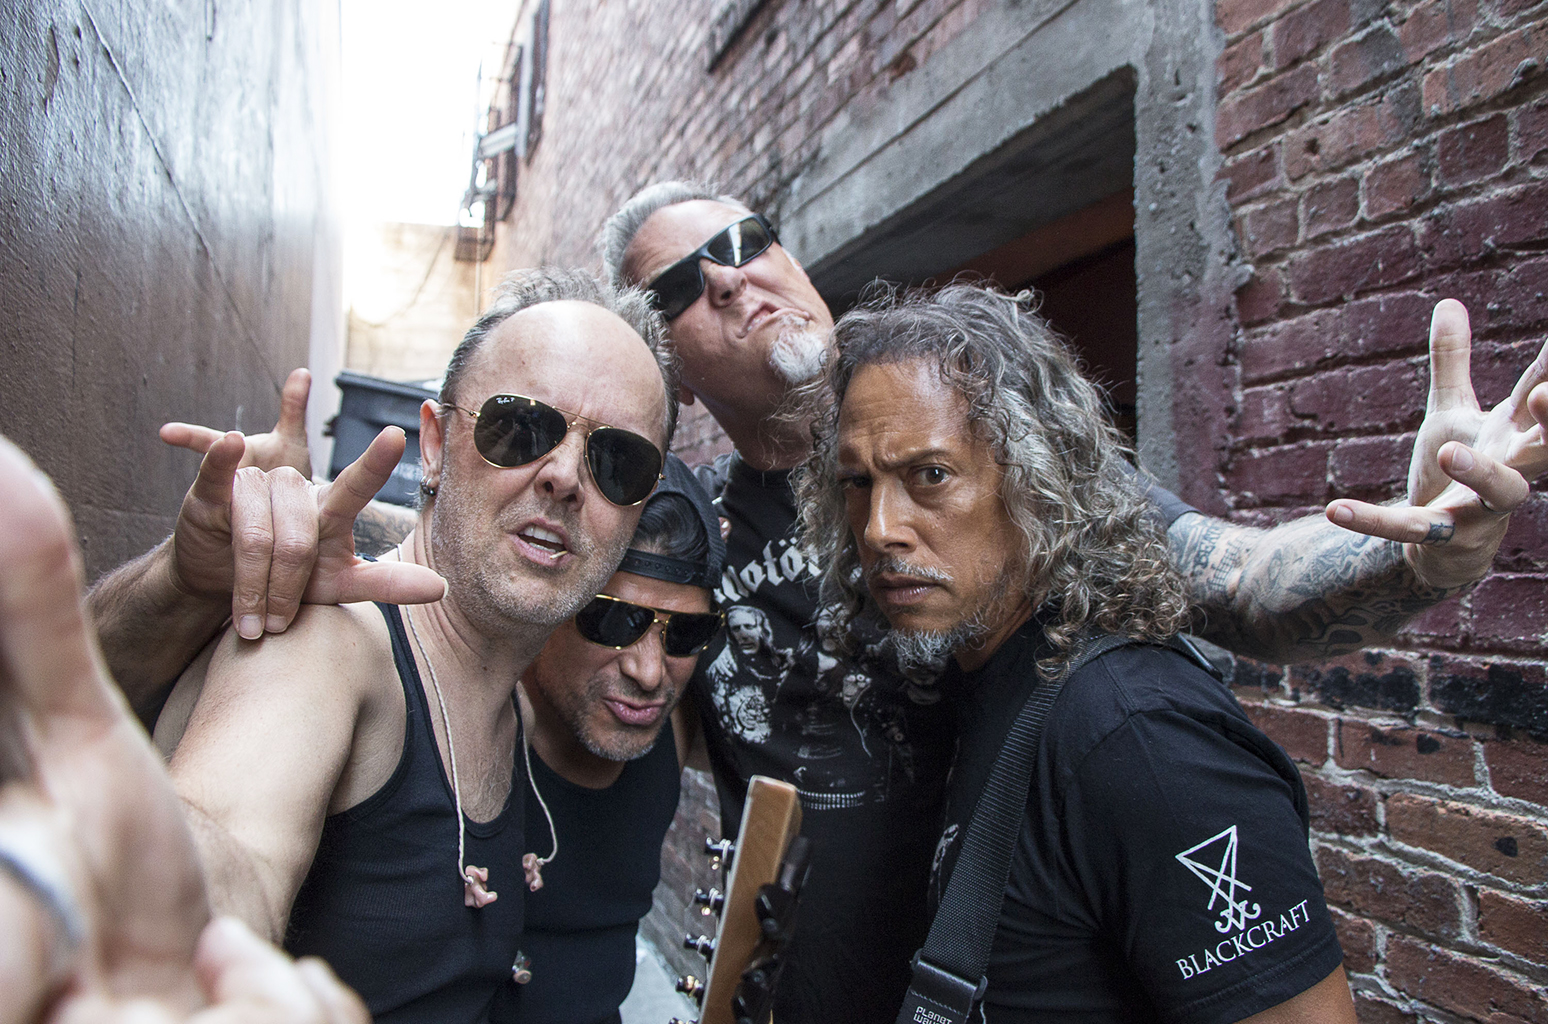 Pillaron a Metallica cantando “Enter Sandman” en una tienda de víveres. Cusica Plus